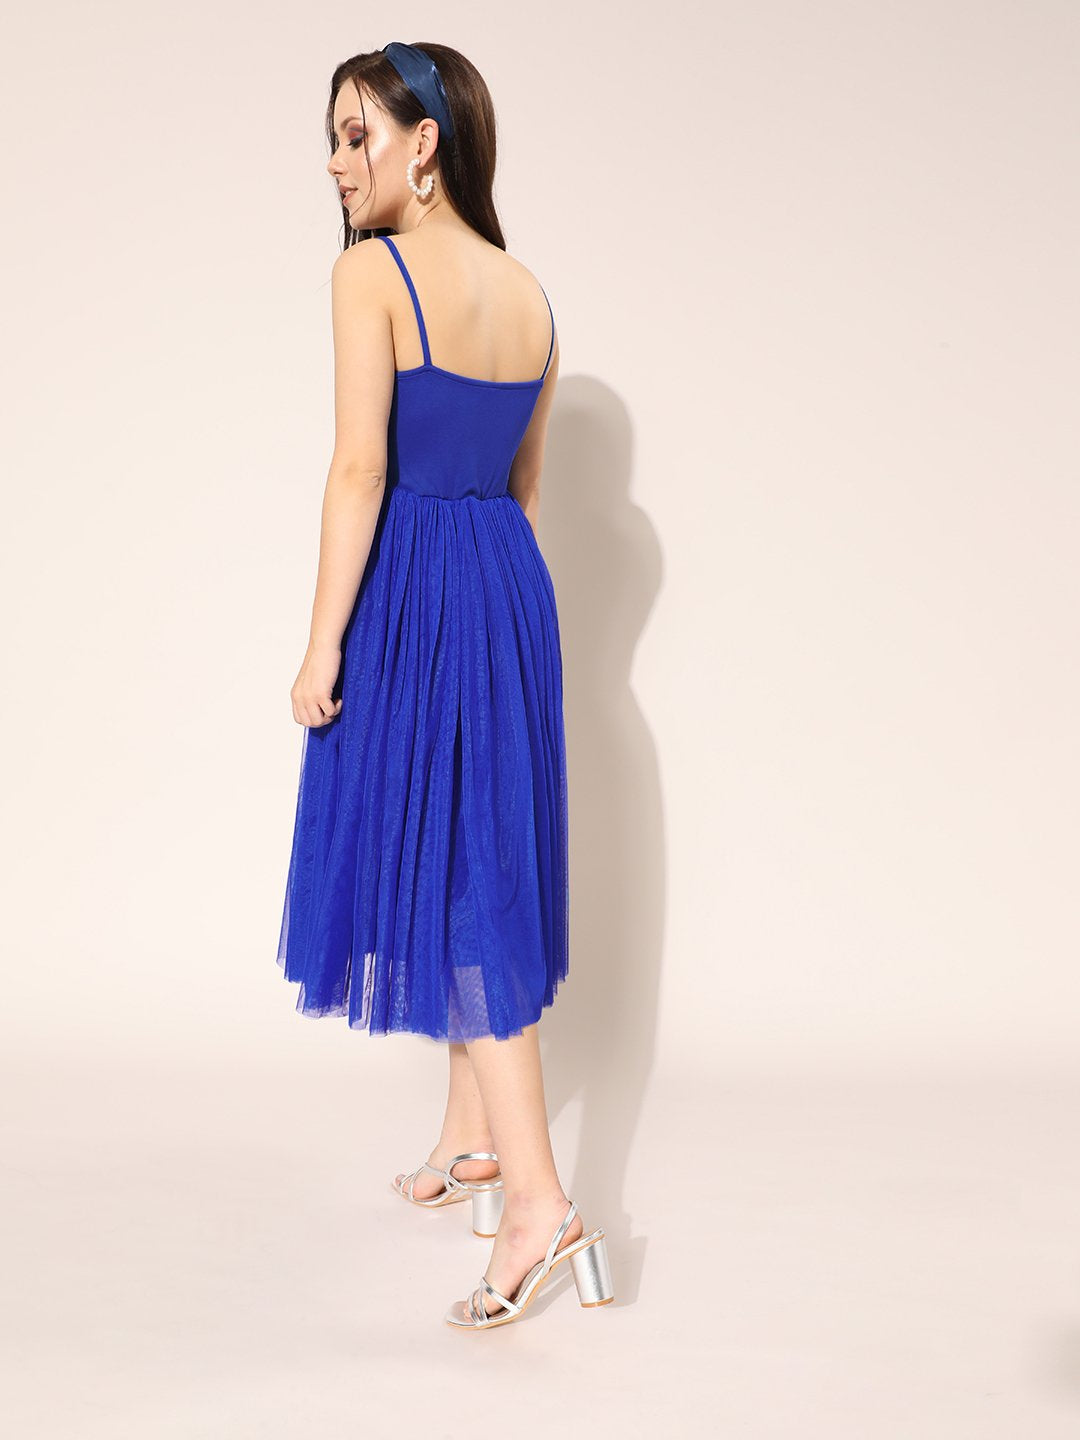 SCORPIUS Royal Blue Tulle Dress